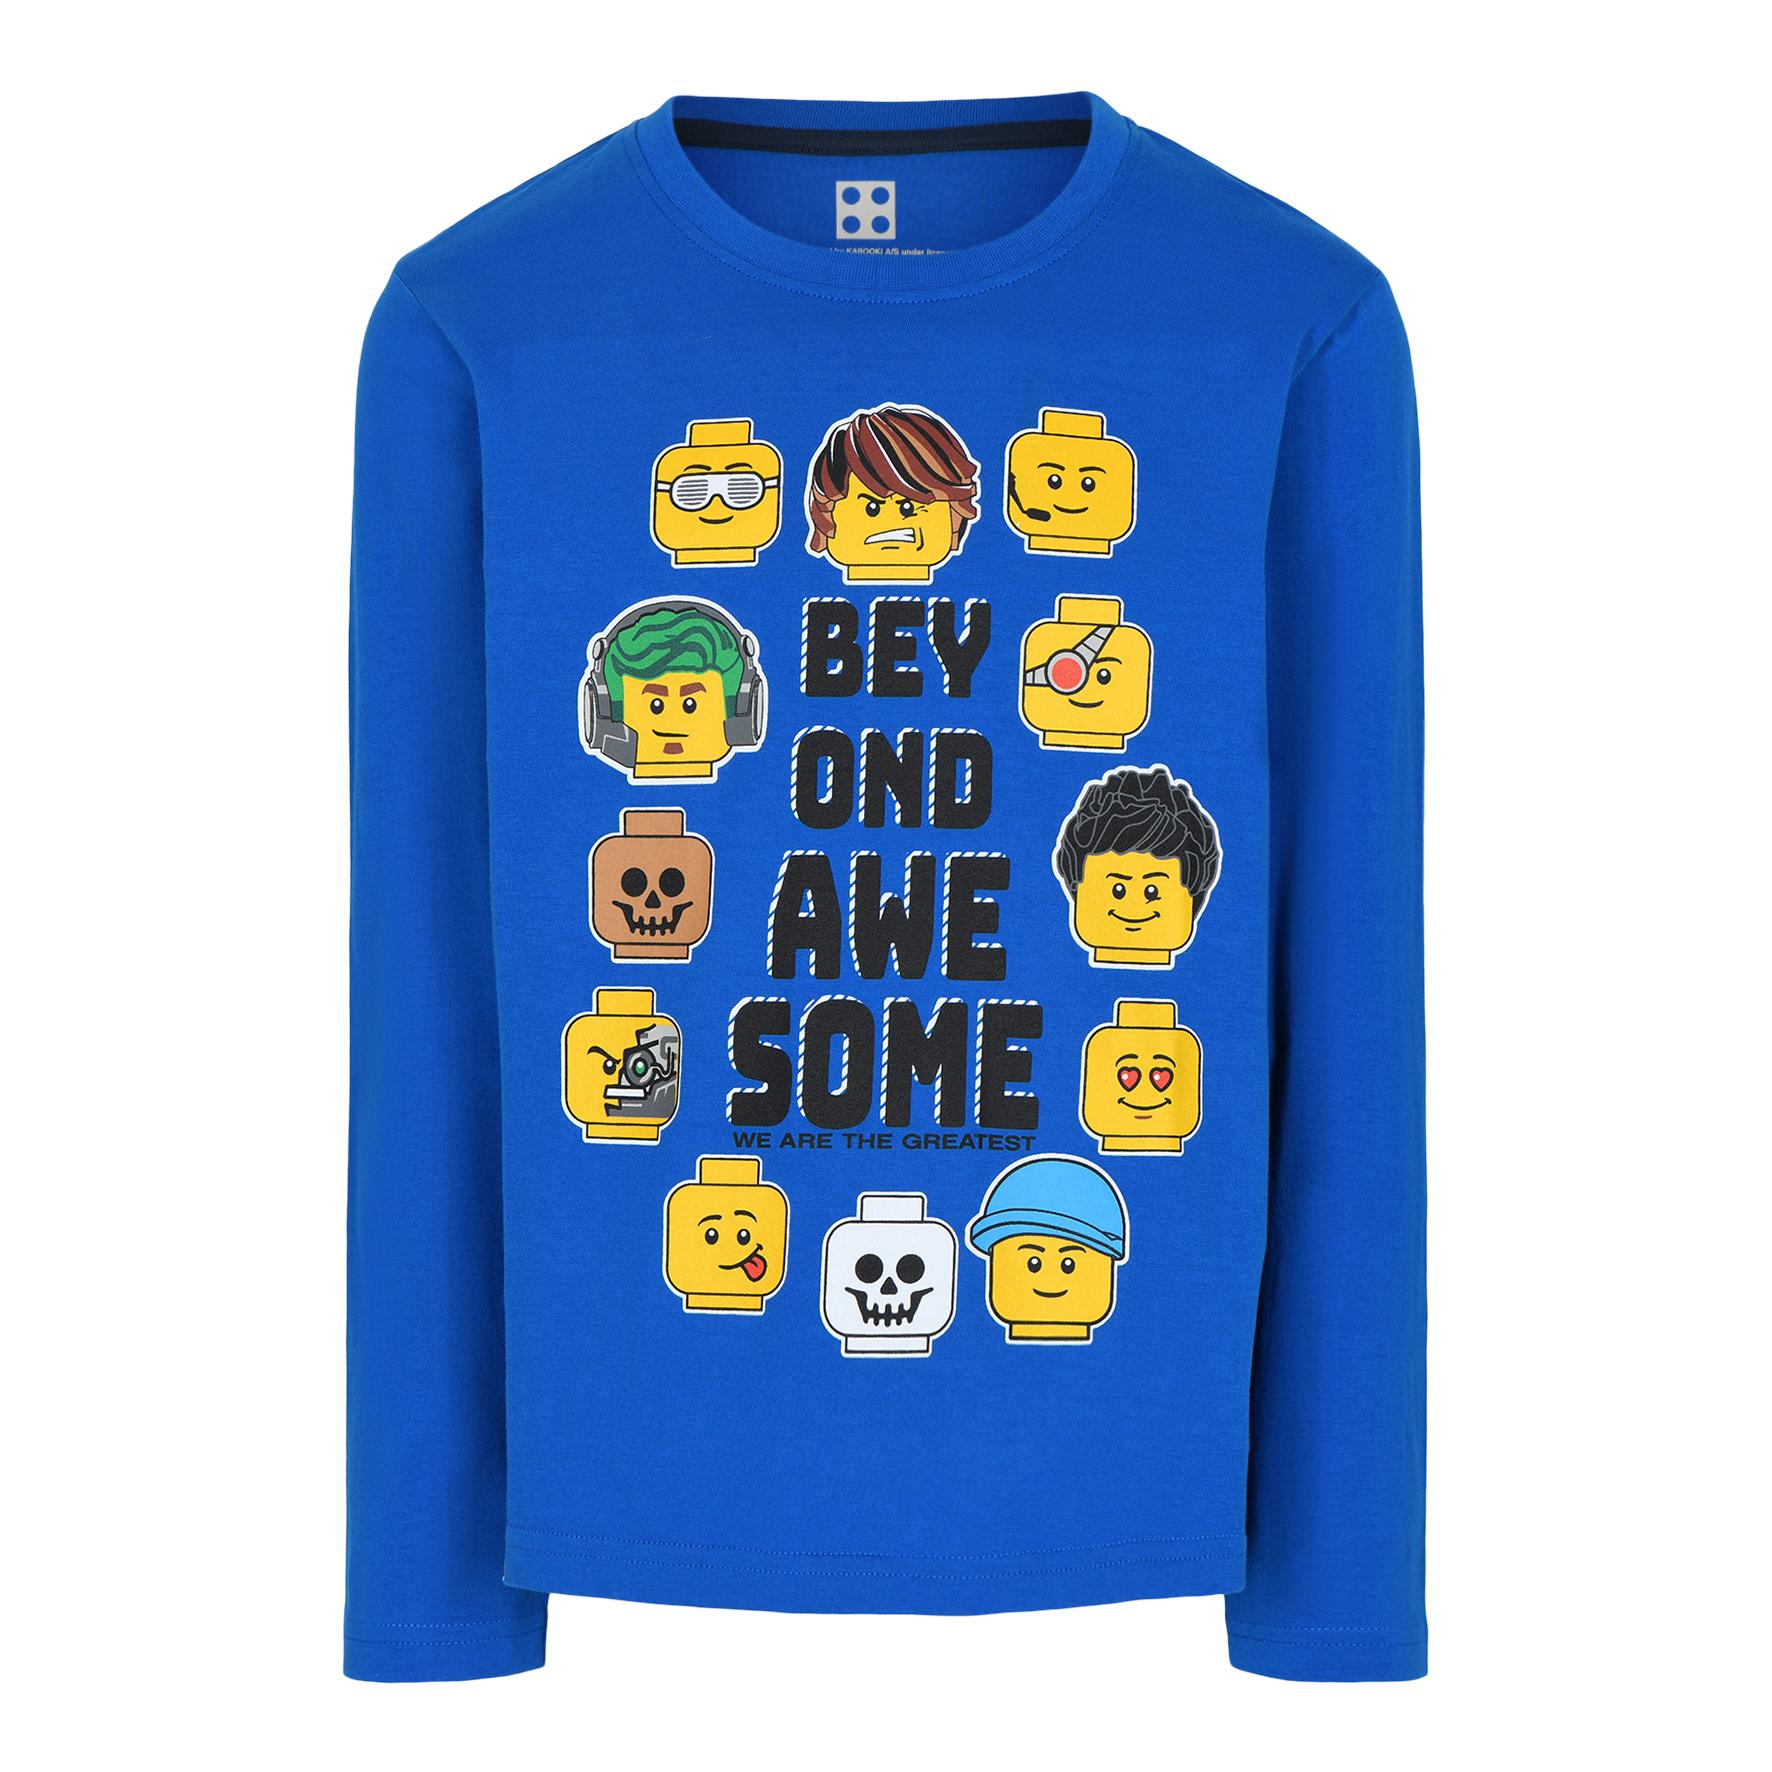 Lego Wear T-Shirt lange mouw blauw beyond awesome 